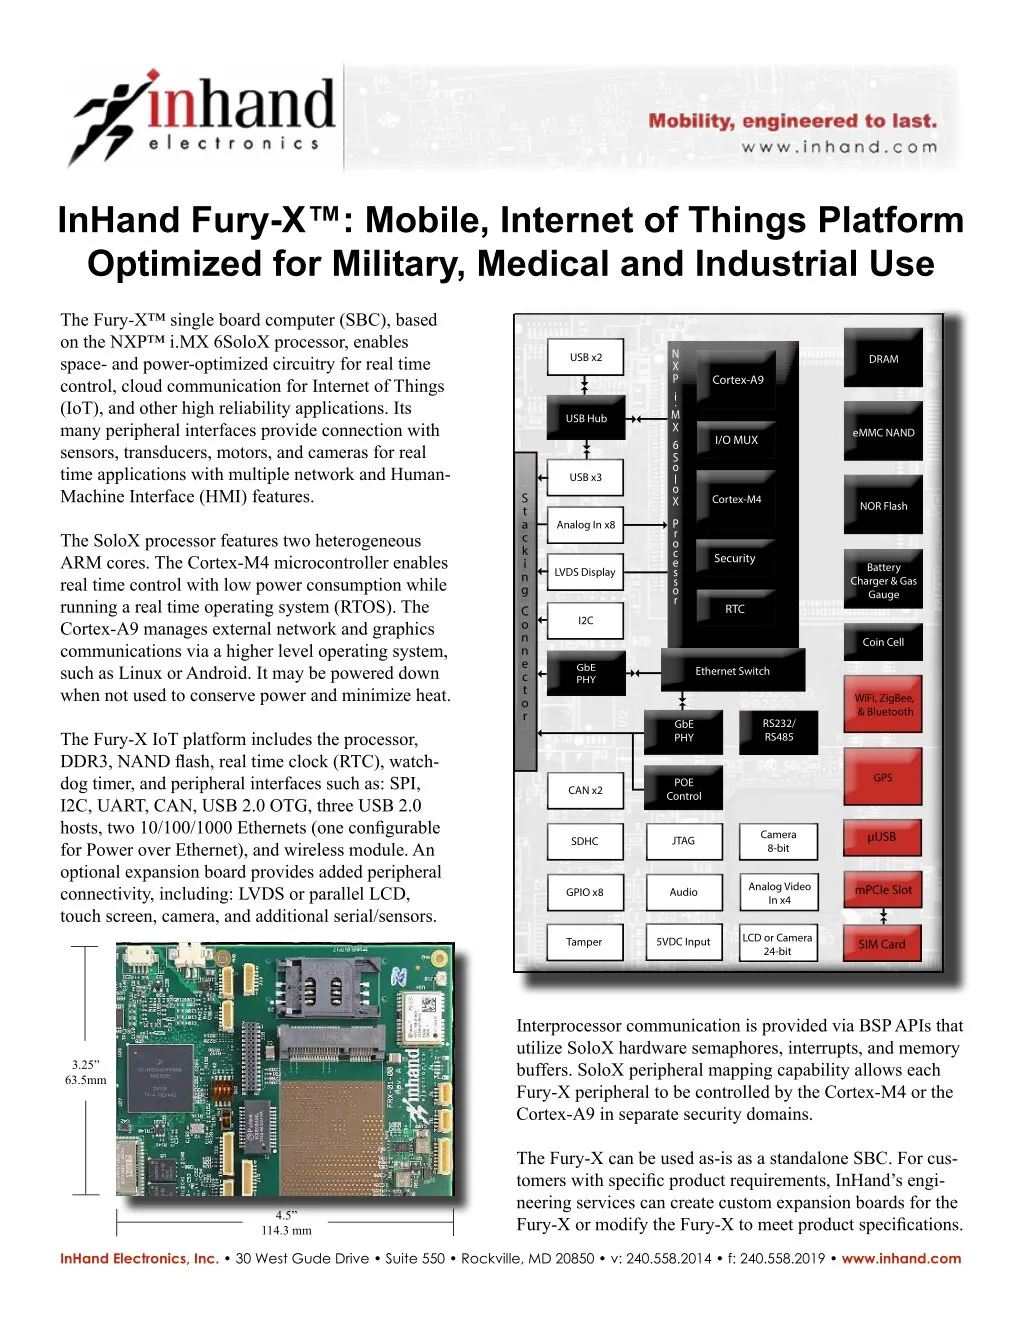 inhand fury x mobile internet of things platform